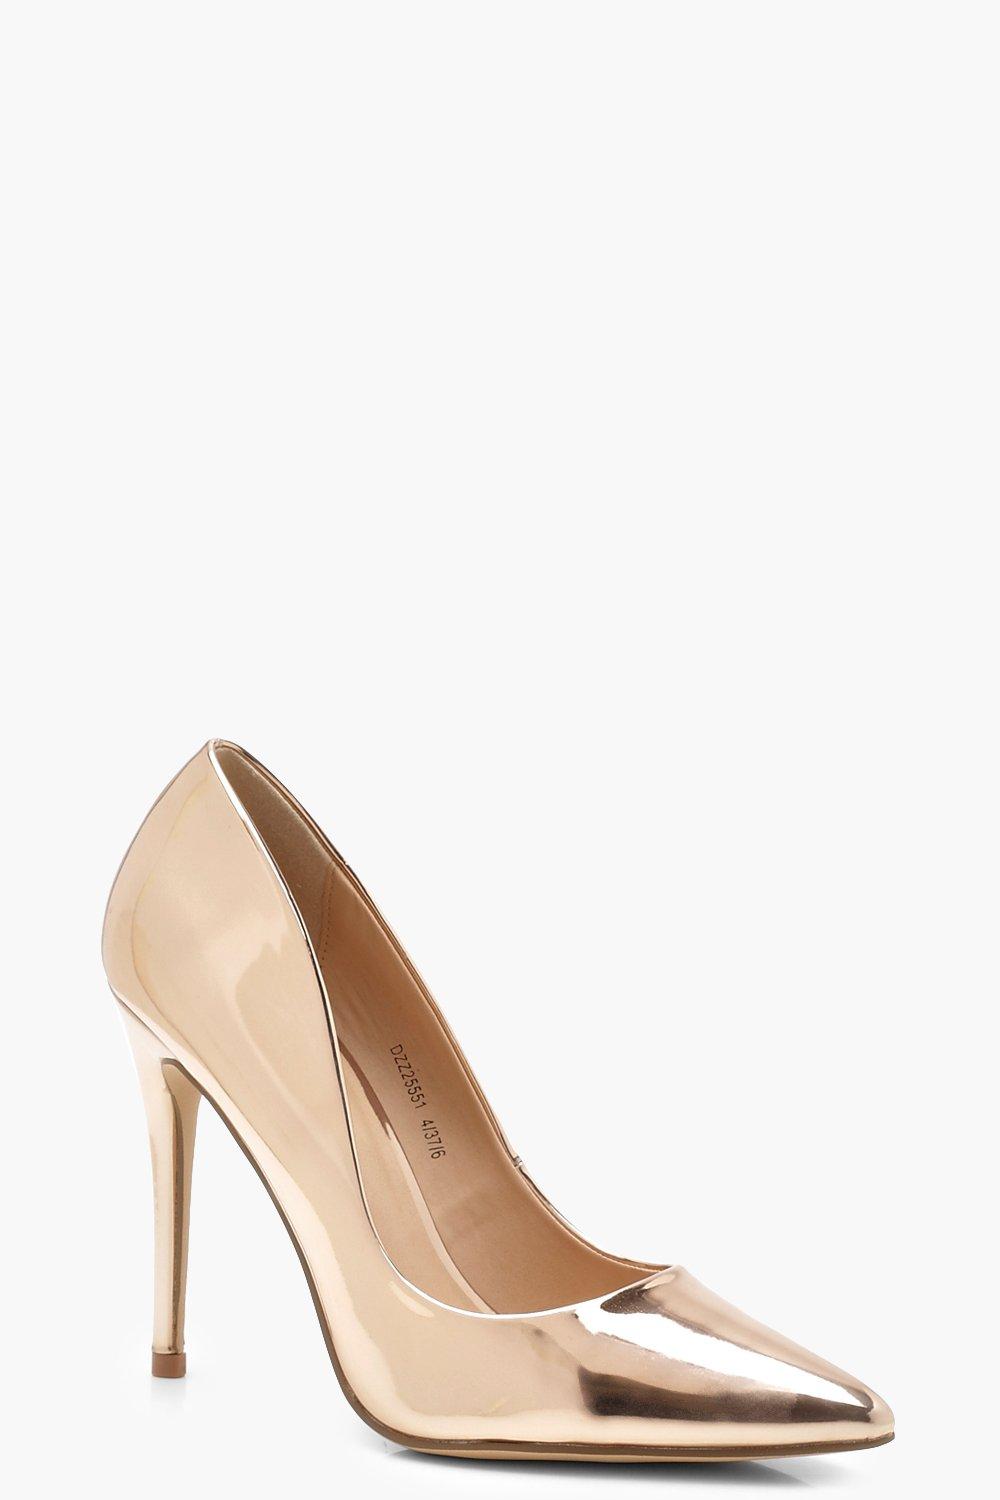 rose gold court heels